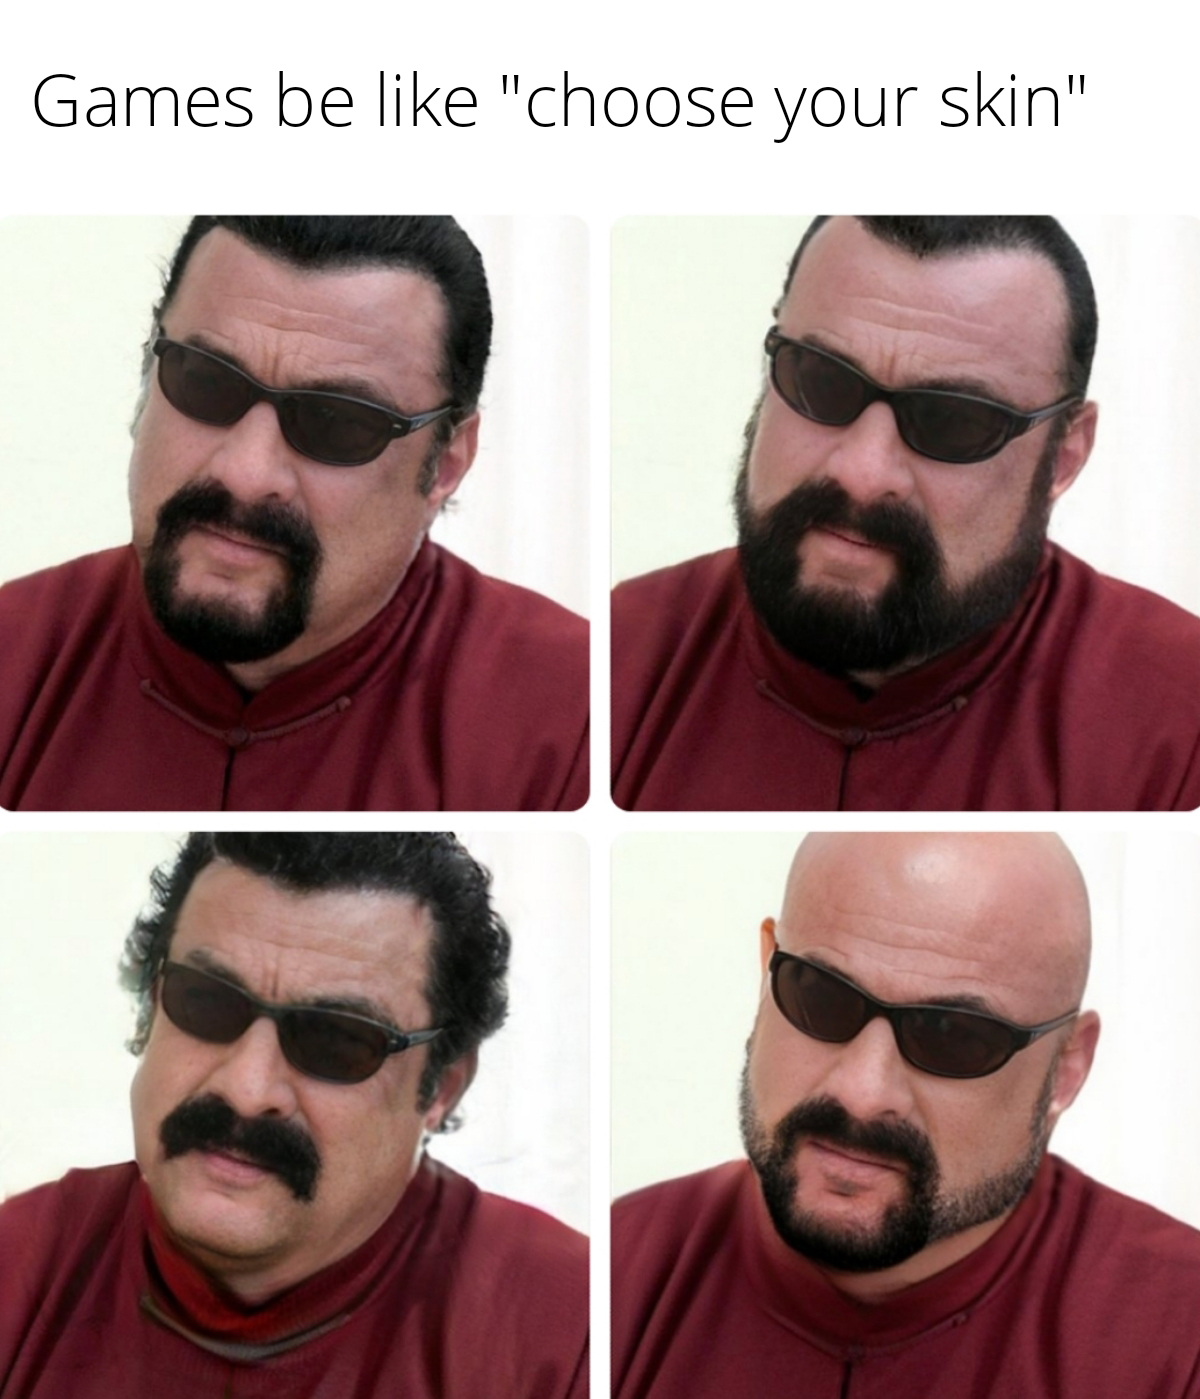 Monday Morning Randomness - beard - Games be "choose your skin"